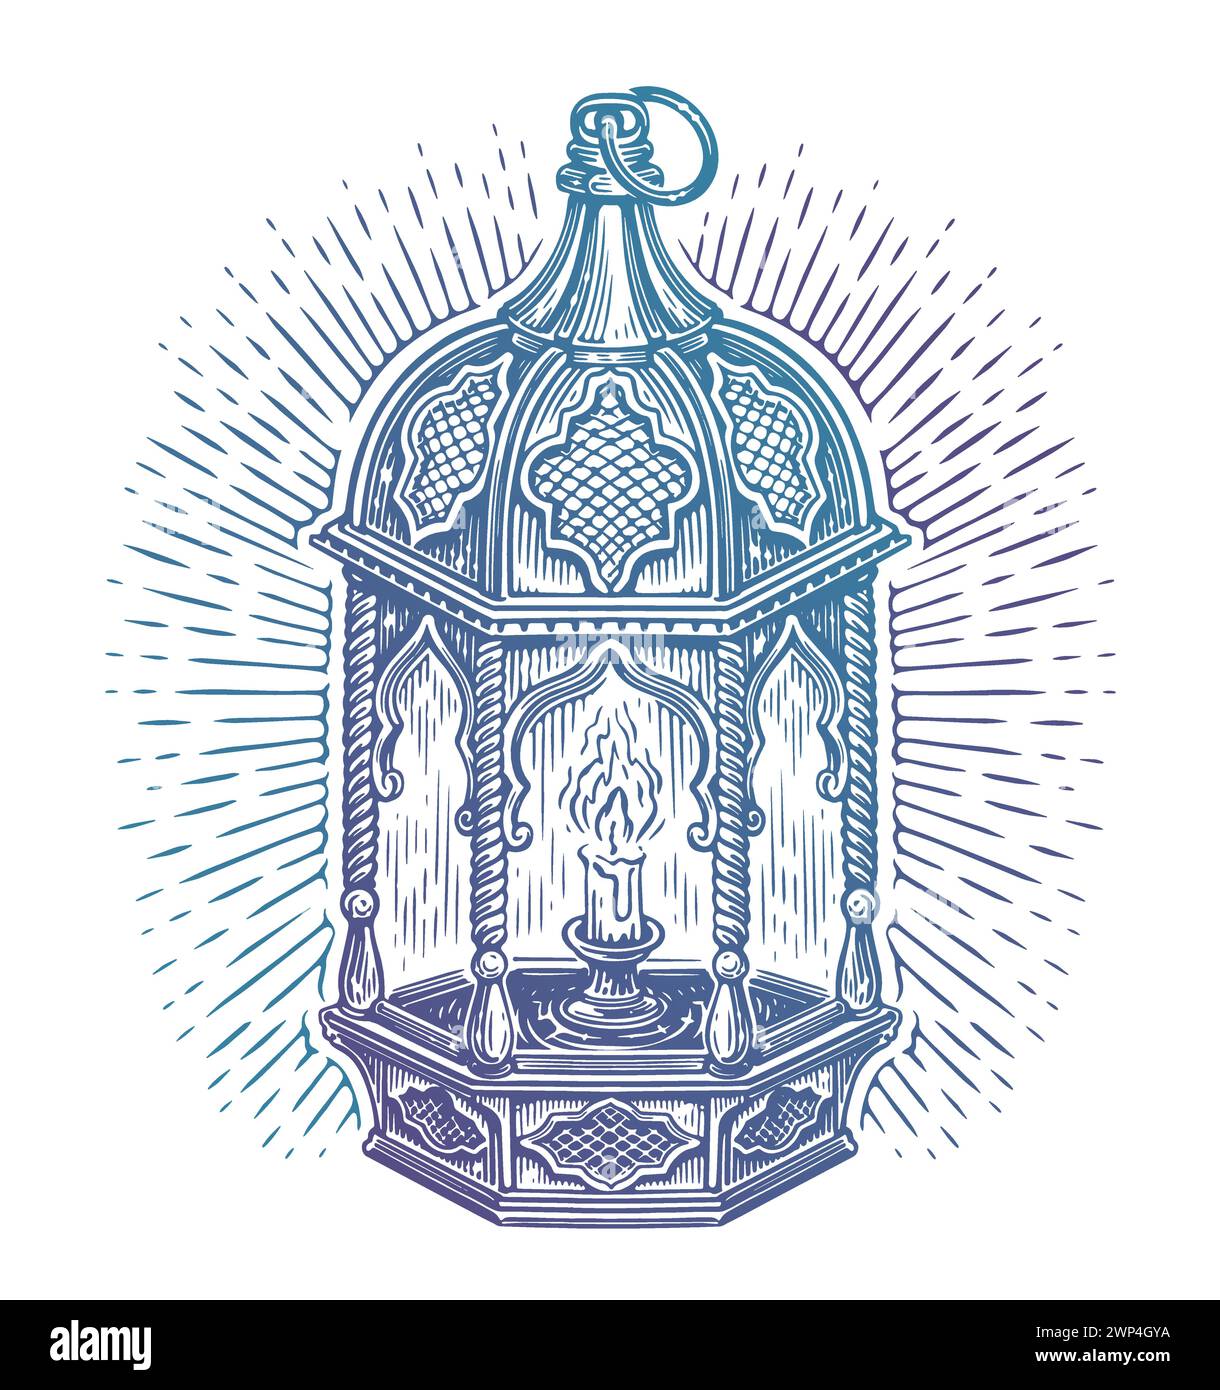 Ramadan-Laterne. Islamische Lampe. Handgezeichnete Skizze Vintage Vektor Illustration Stock Vektor